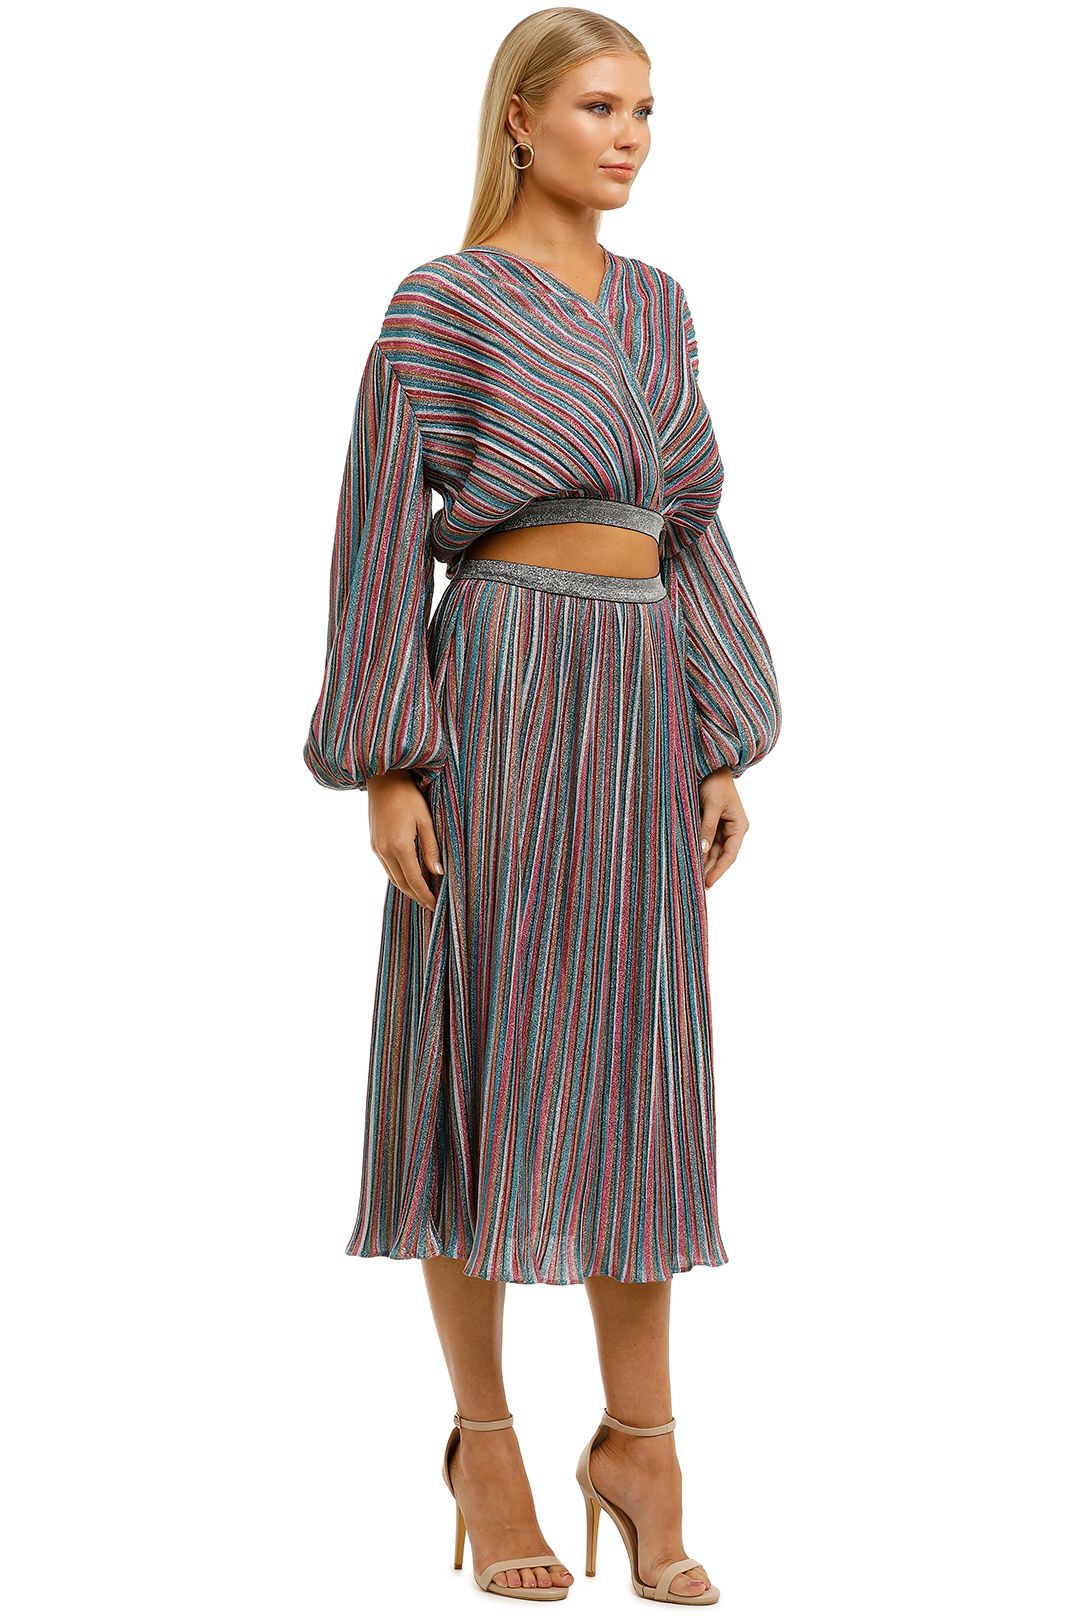 Elliatt-Fleur-Top-and-Skirt-Set-Multi-Stripe-Side